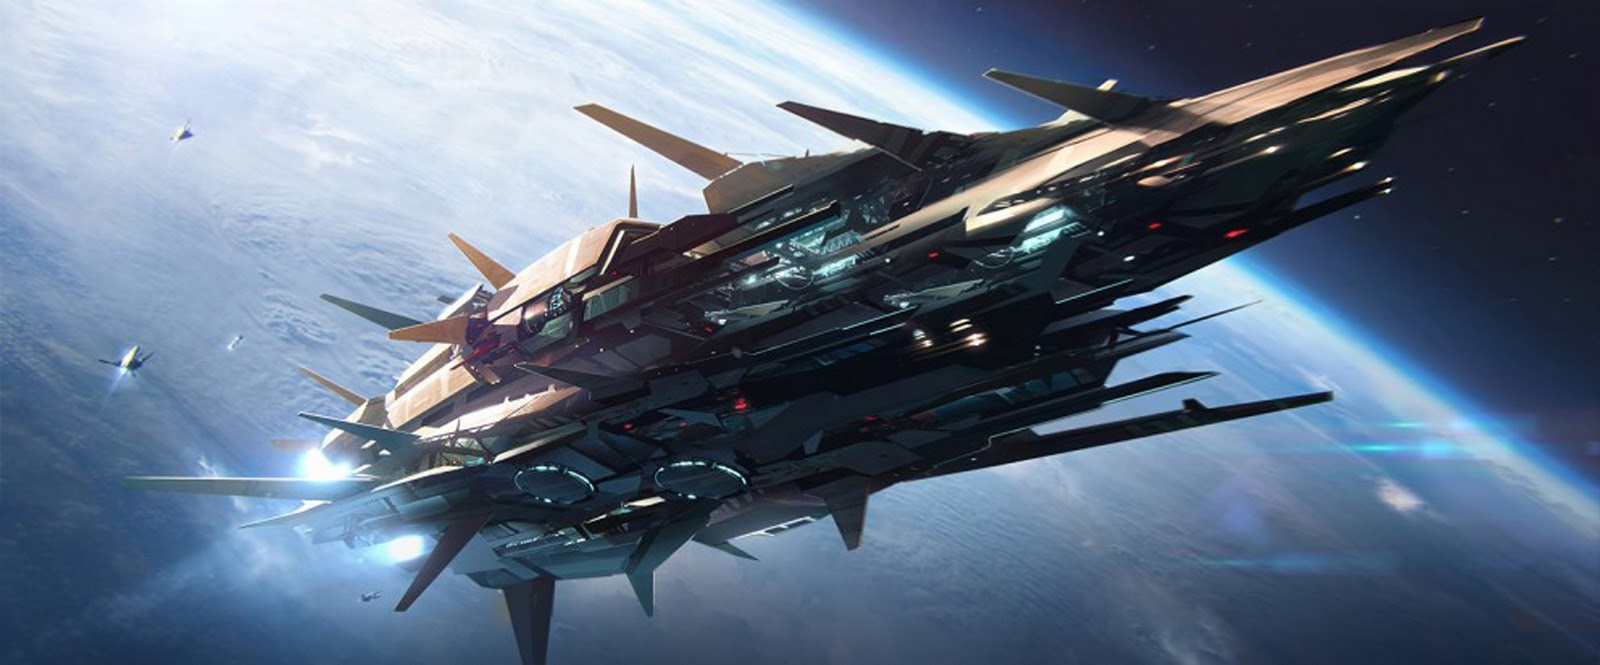 Dreamscape_star_wars_warship_armada_cruiser_futuristic_sci_fi_spaceship_iv_by_jamshed_jurabaev.jpg